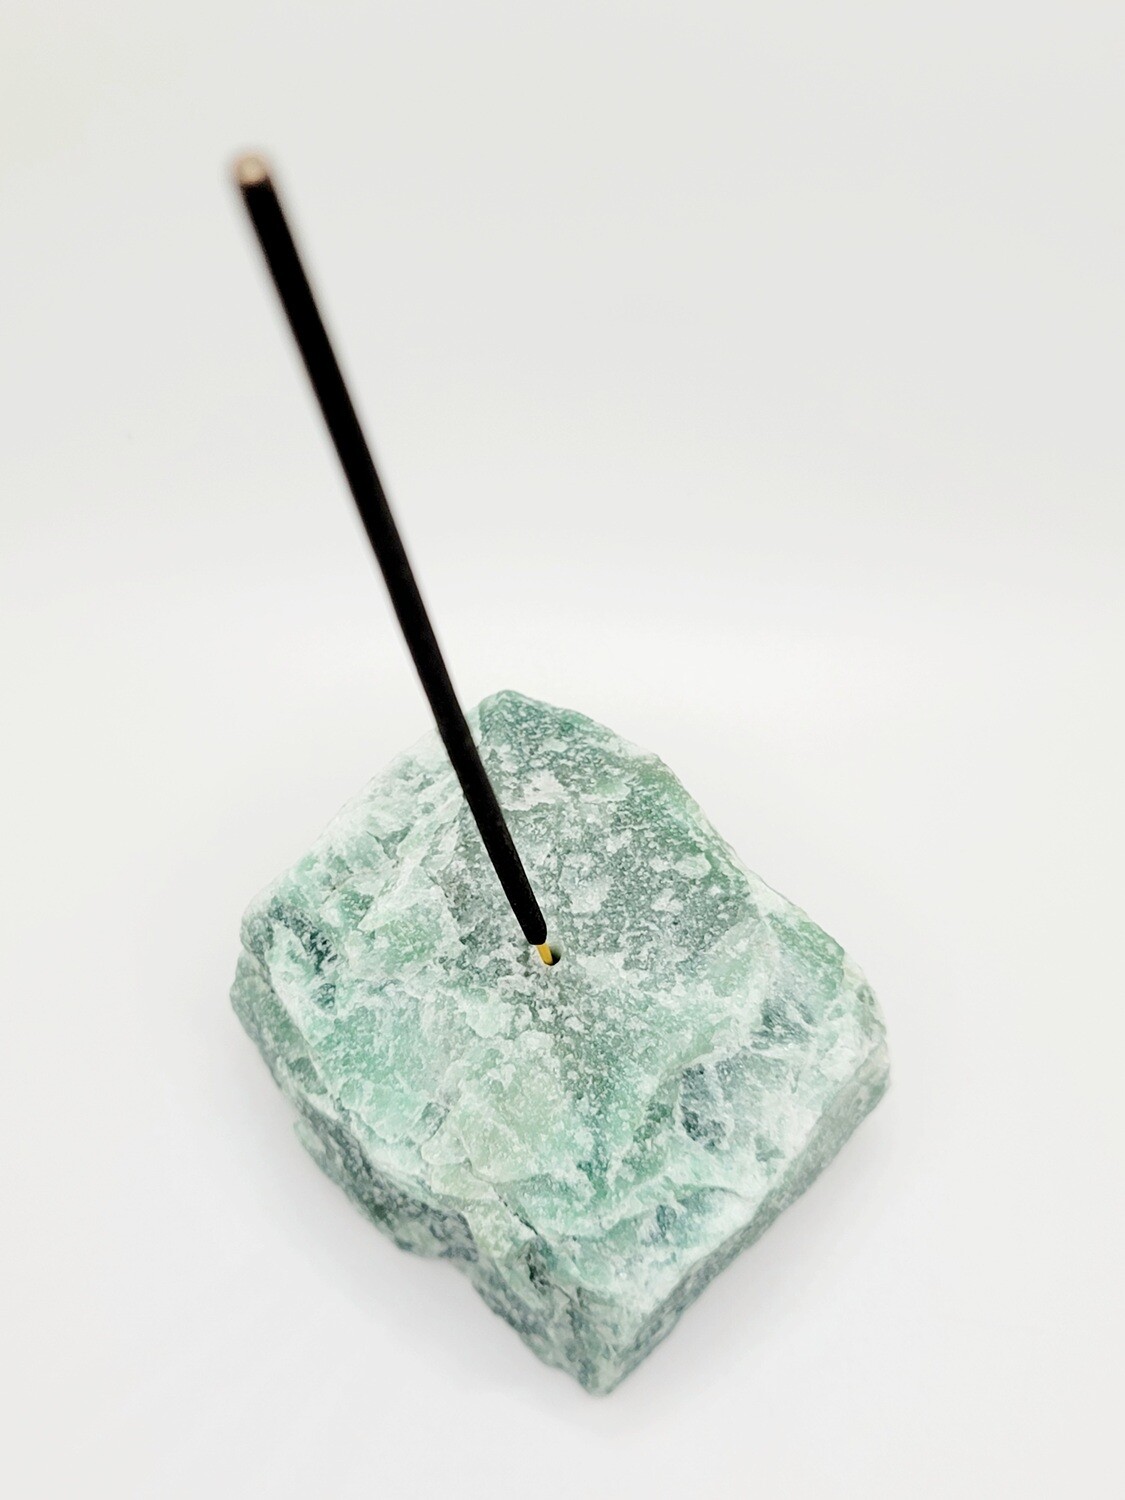  Rough Stone Incense Holder, Green Quartz